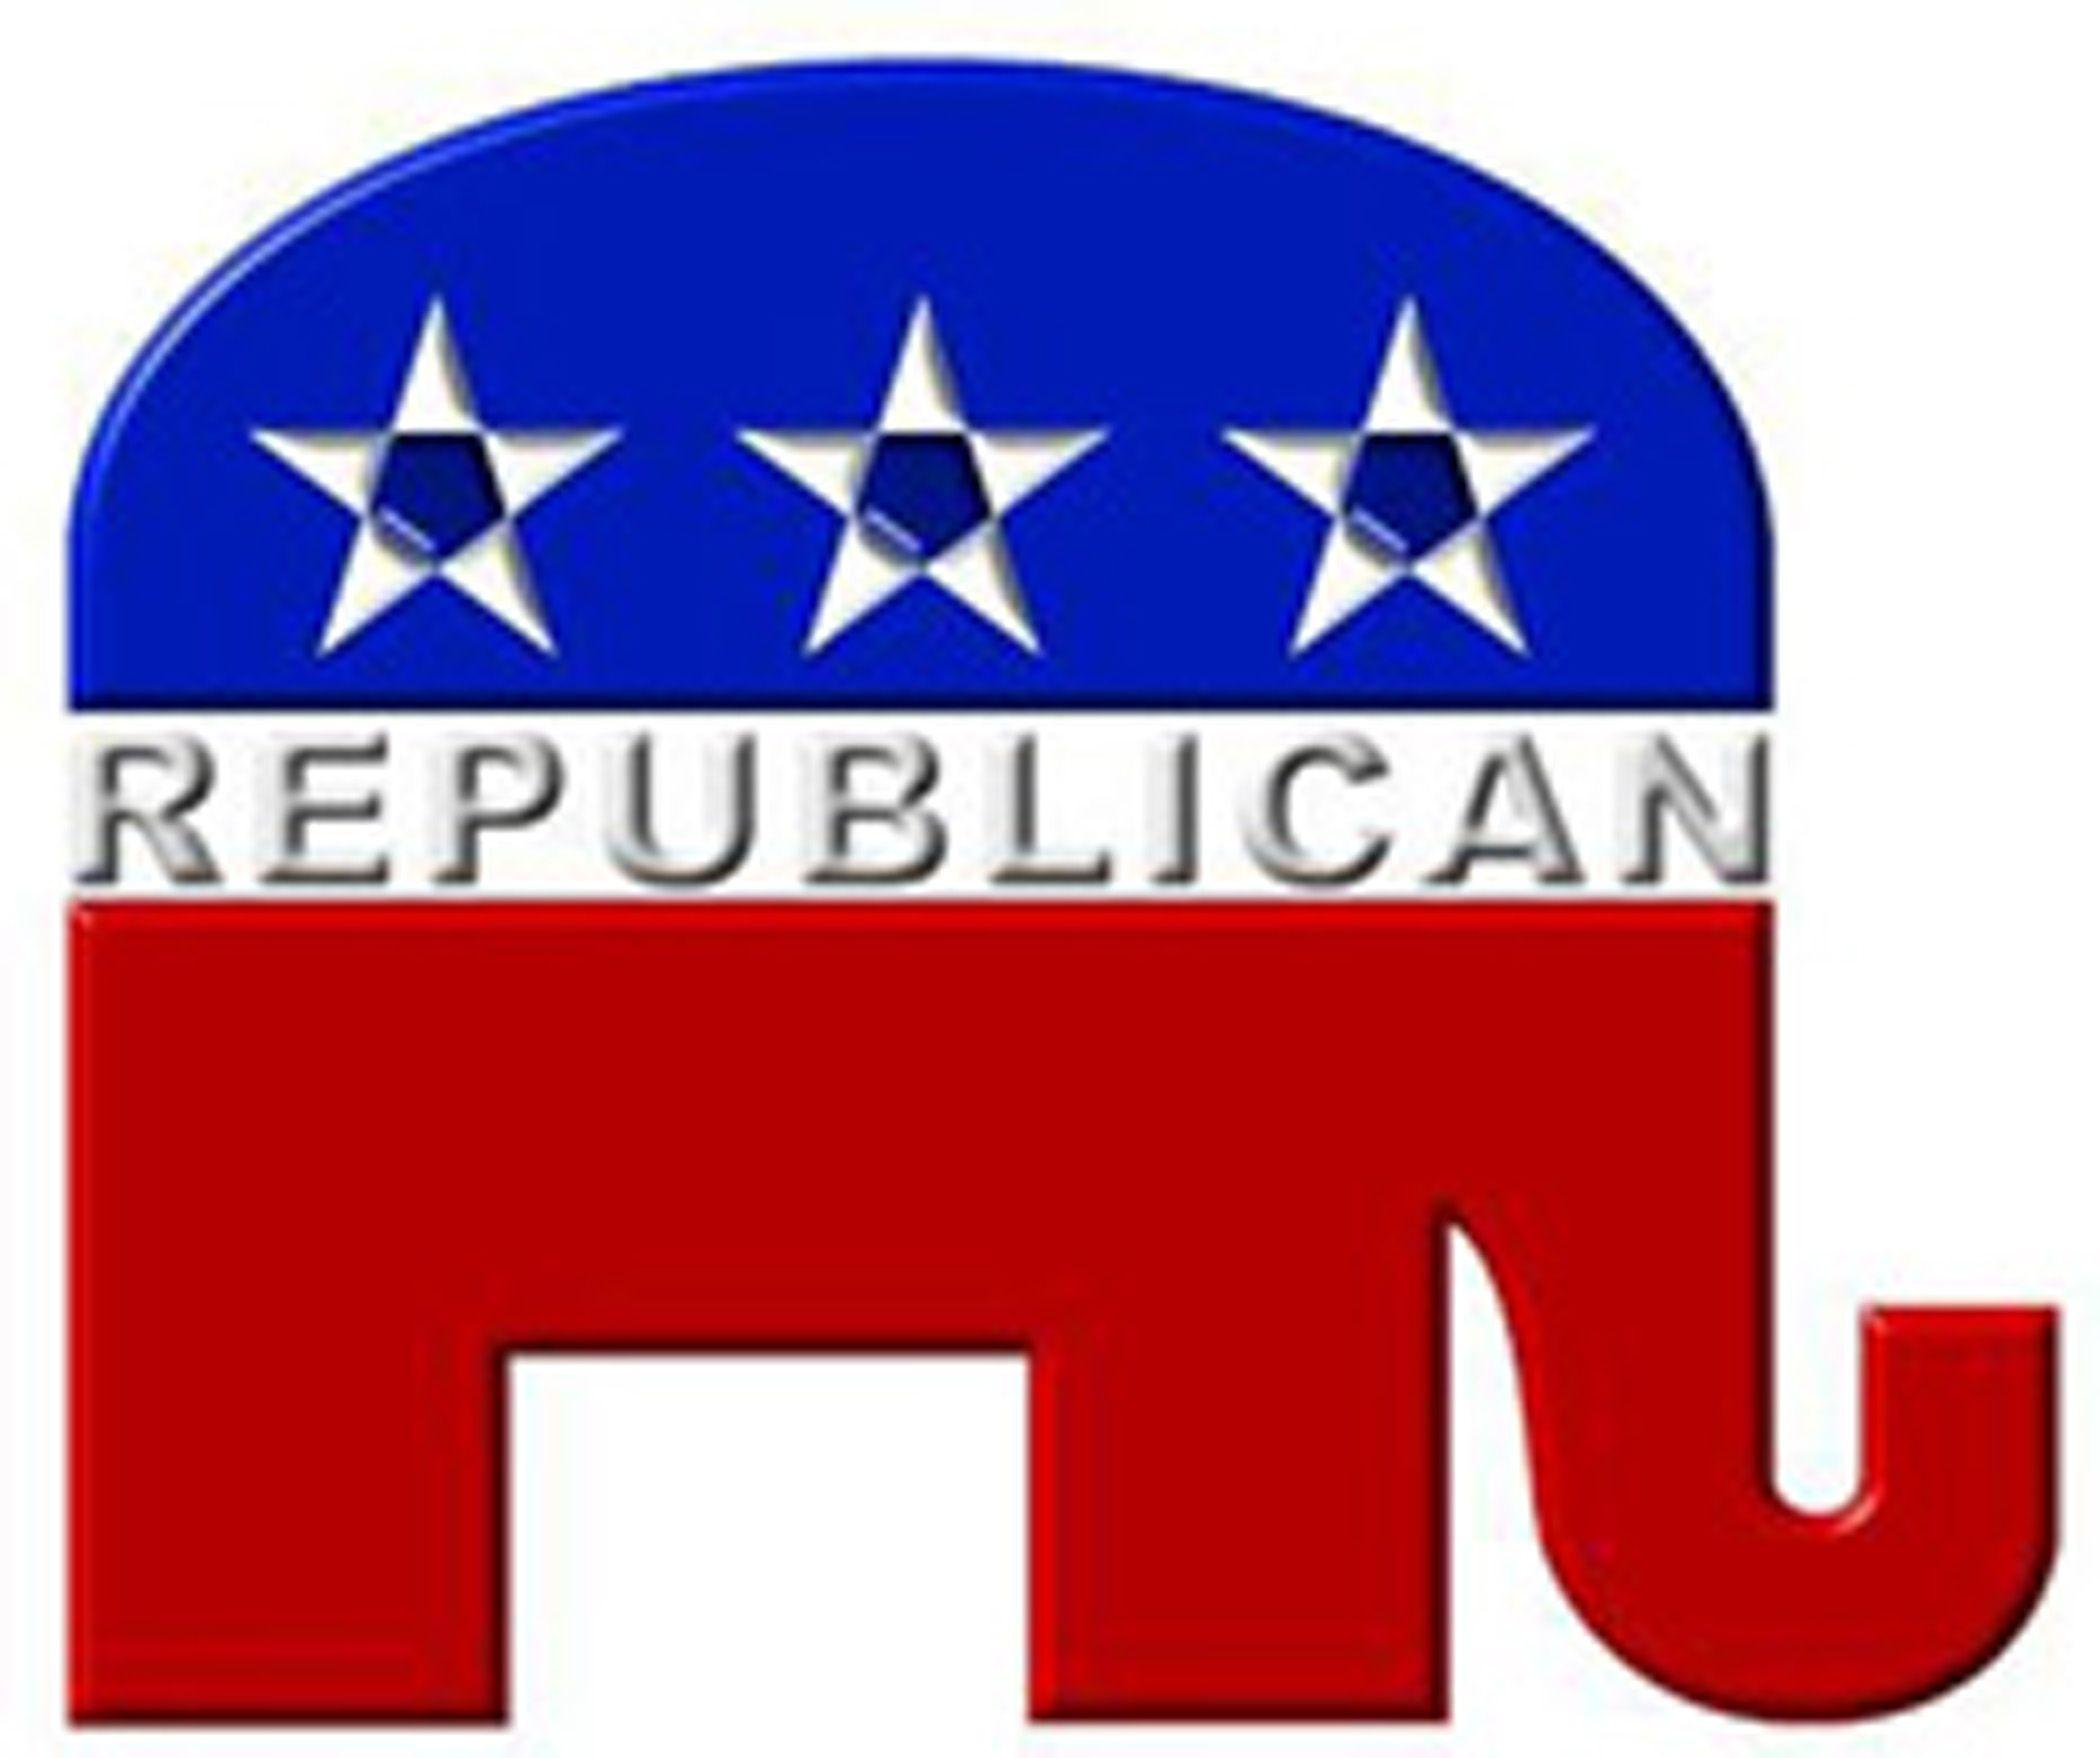 Republican Elephant Logo - Free Republican Elephant Picture, Download Free Clip Art, Free Clip ...